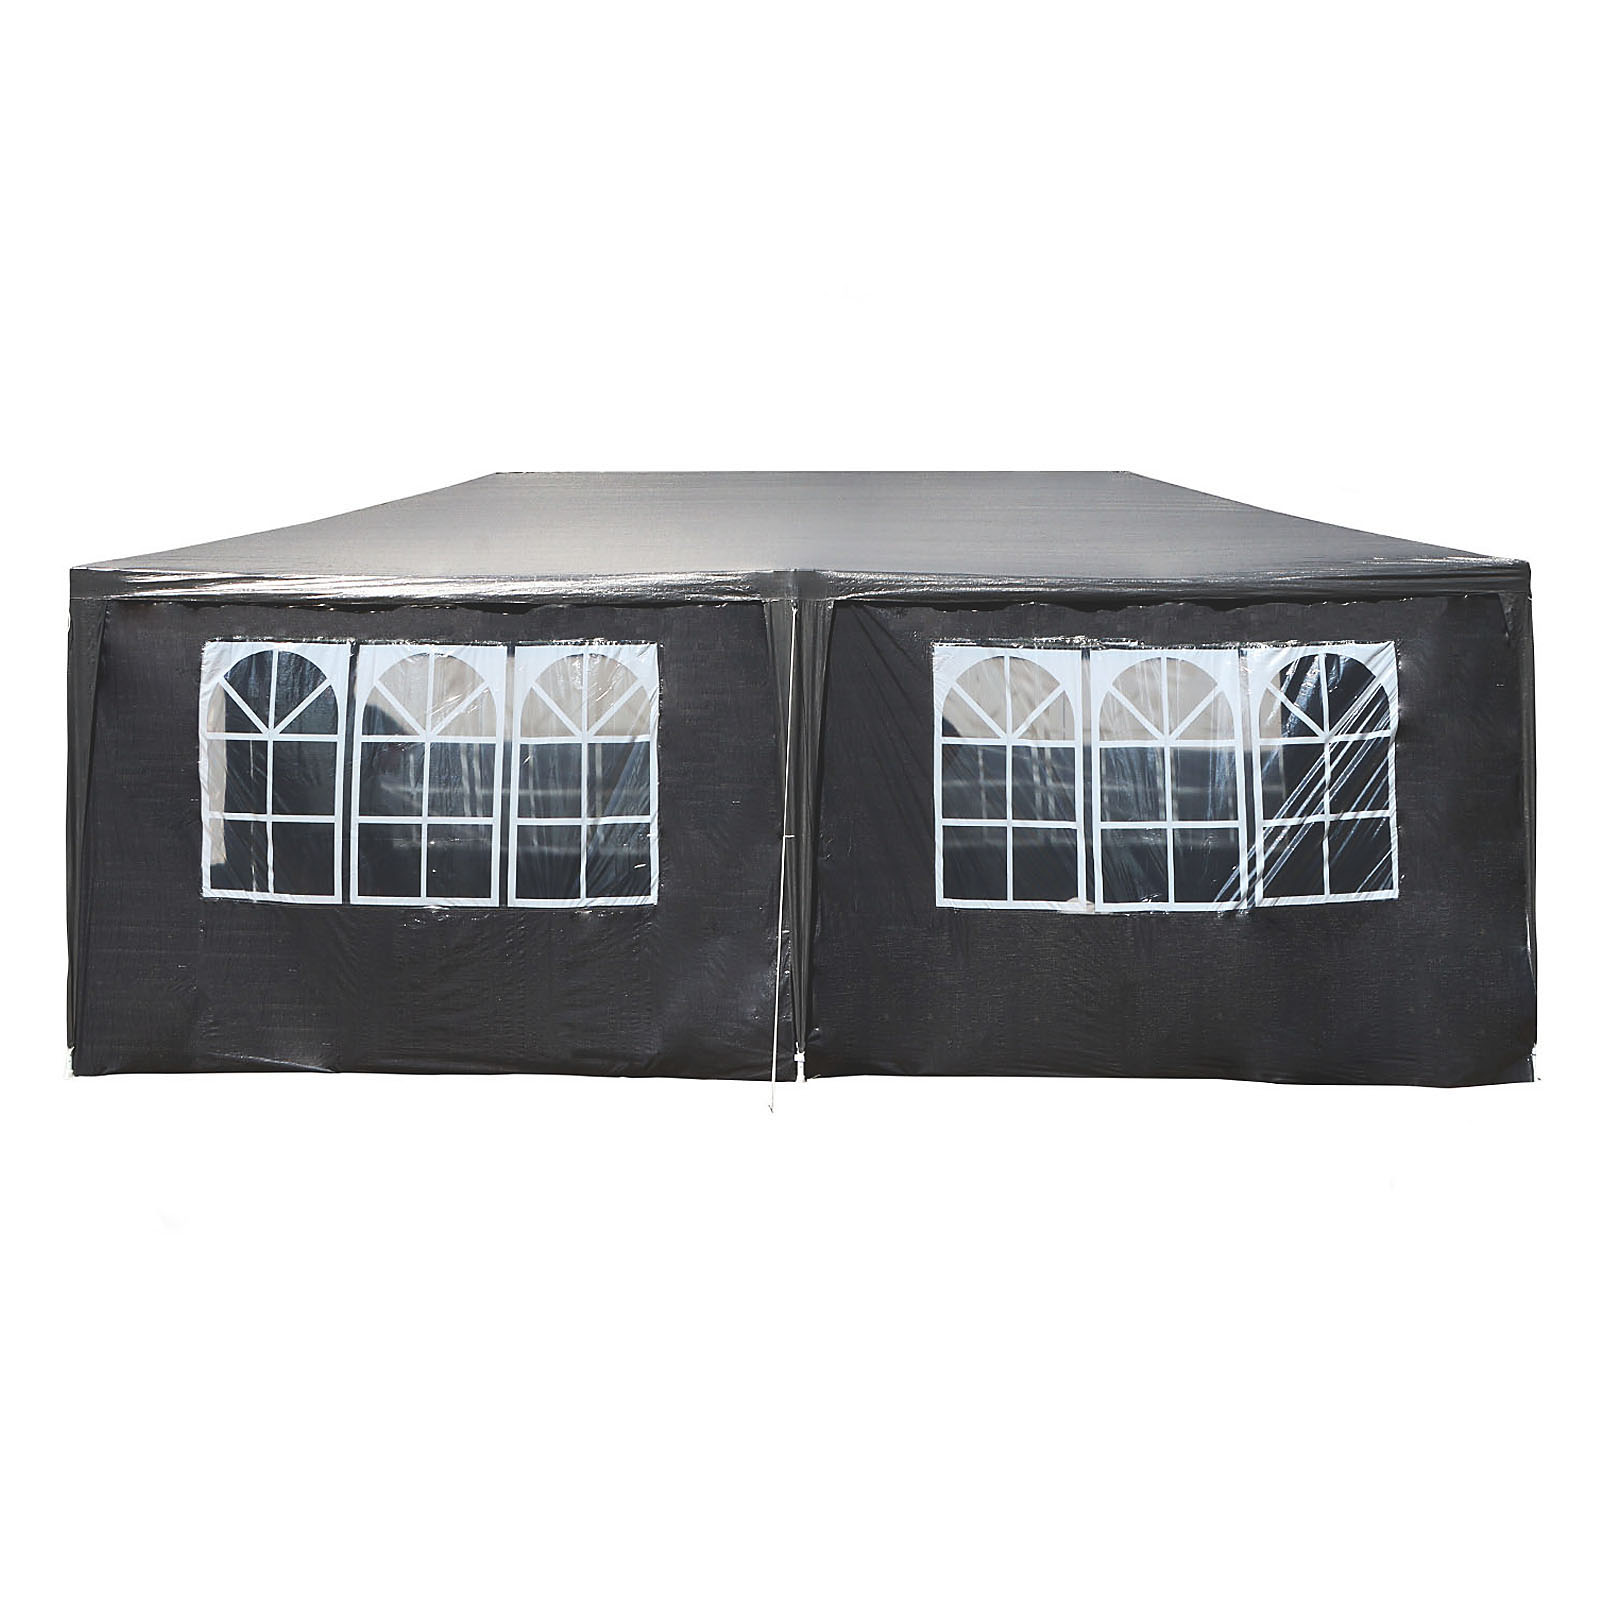 Toboli Pavillon 3x6m, Grau, 6 Seitenteile, Wasserdicht, UV-Schutz 50+